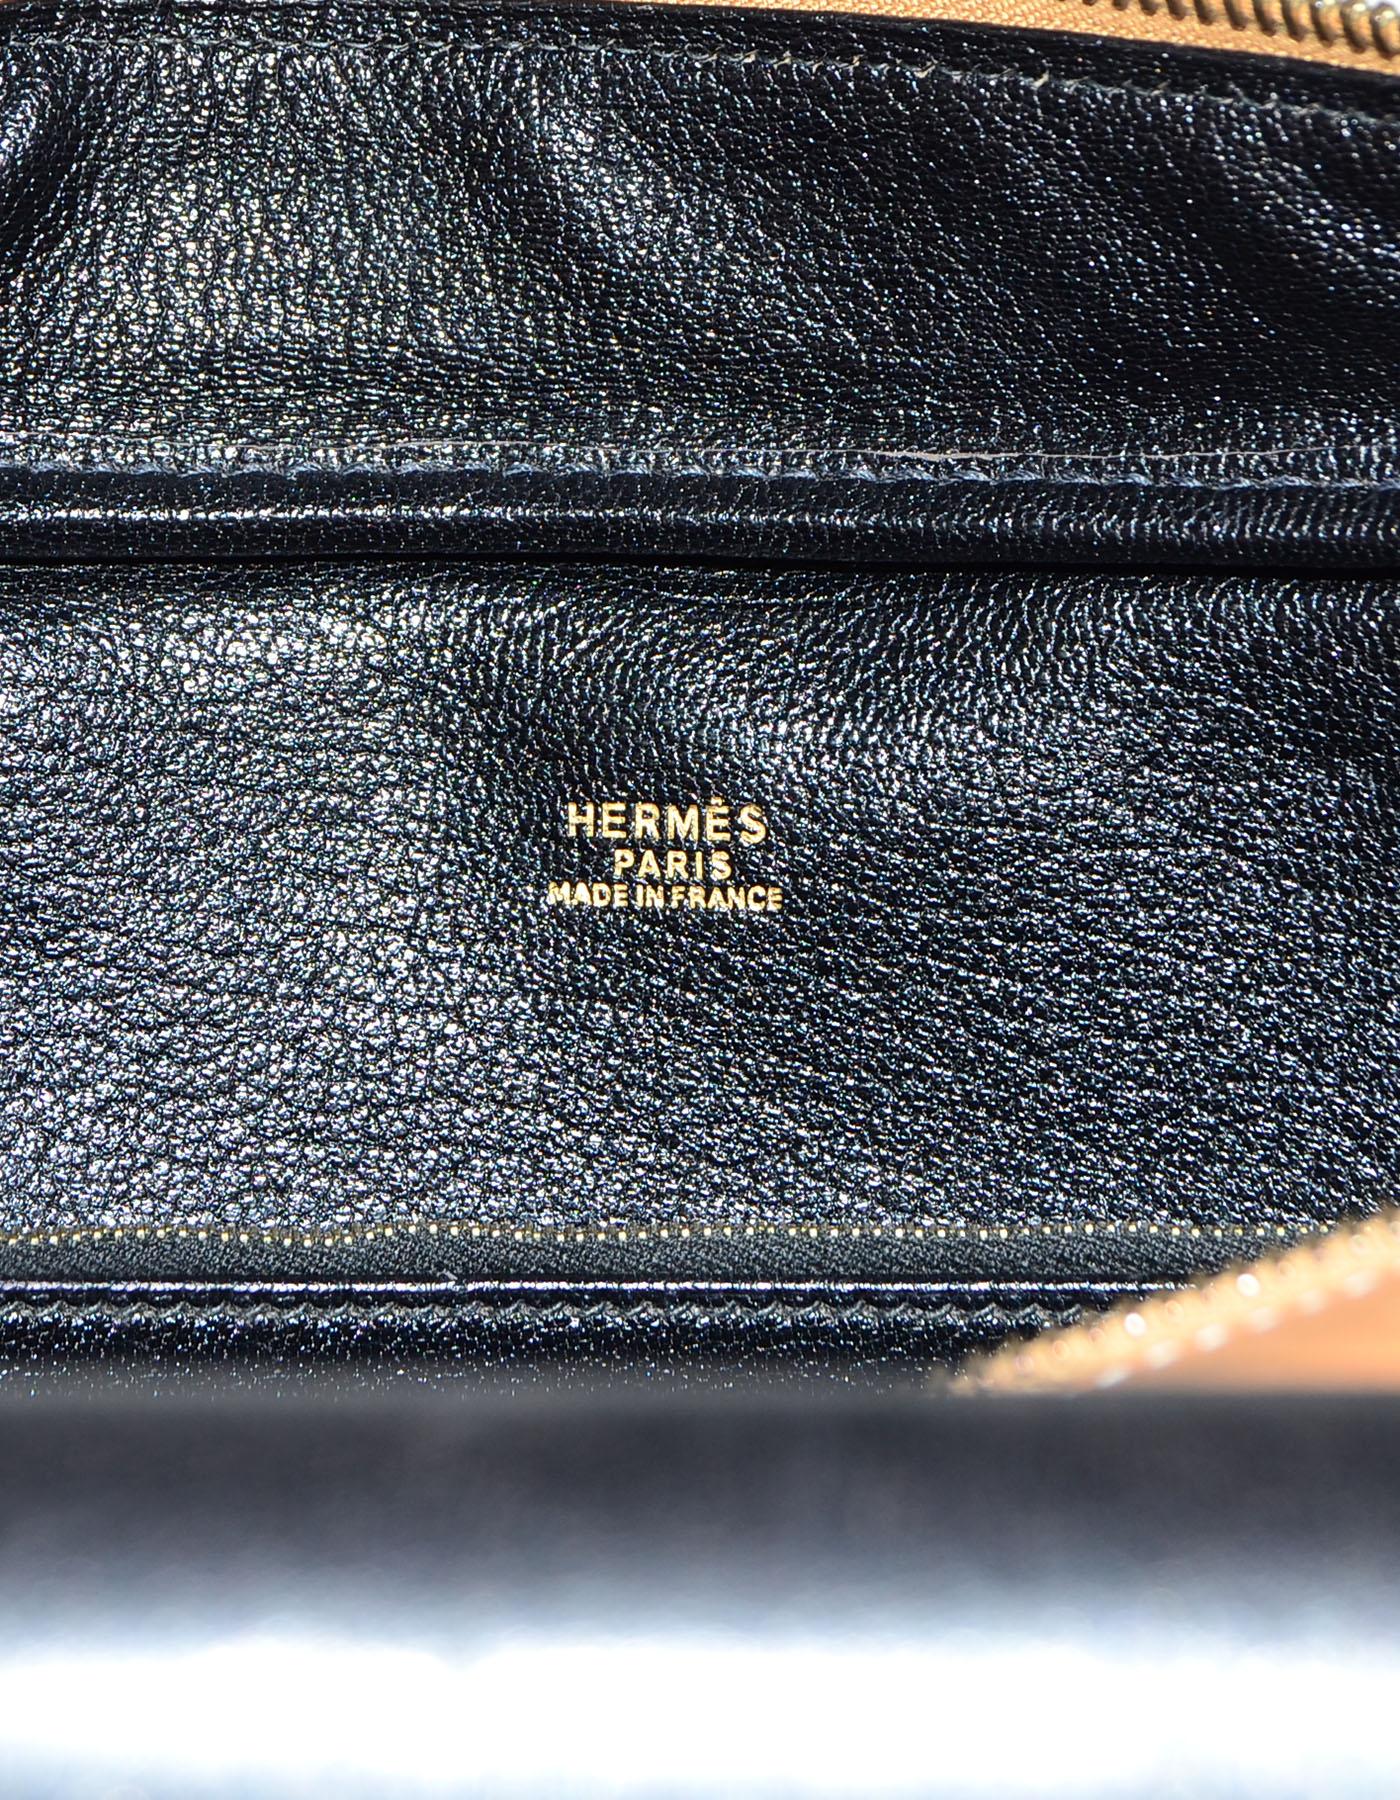 Hermes Vintage Tan & Black Top Handle Leather Handbag 4